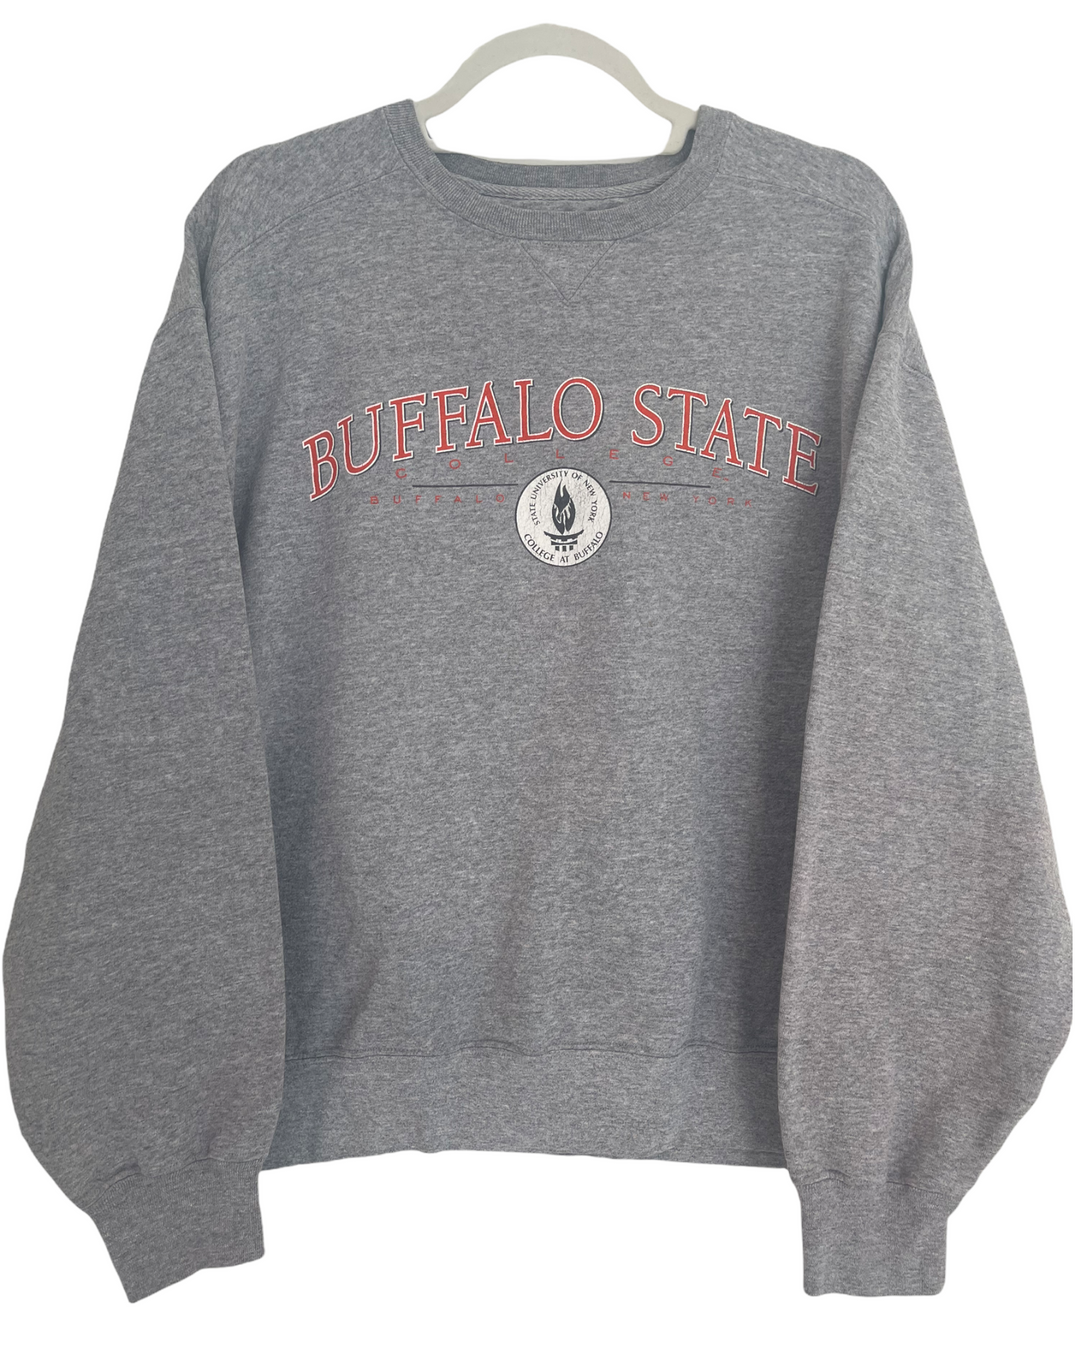 Buffalo State Vintage Sweatshirt